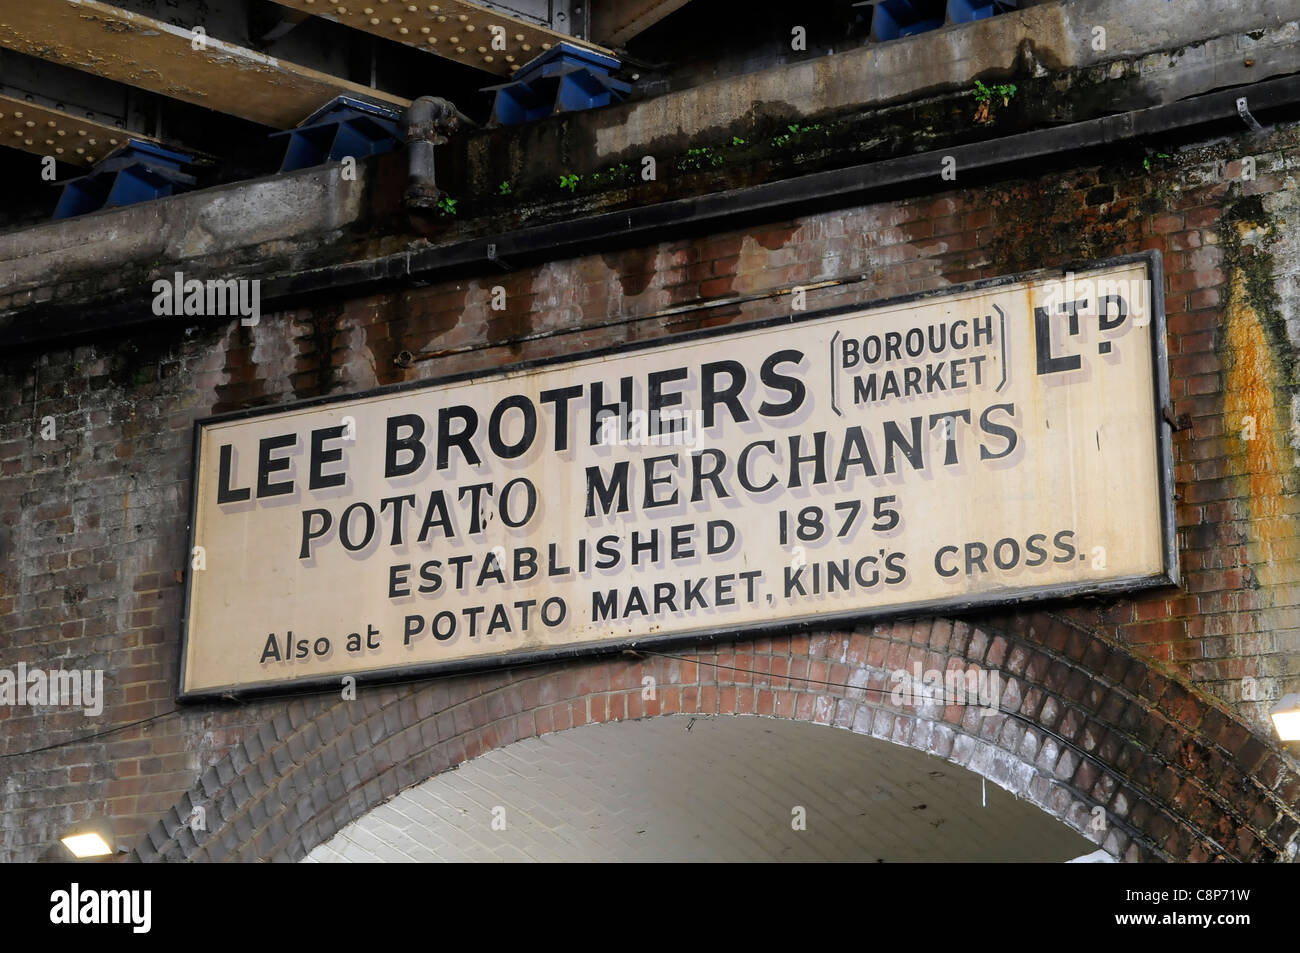 Lee Brothers Potato Merchants sign, Borough Market, London. Stock Photo